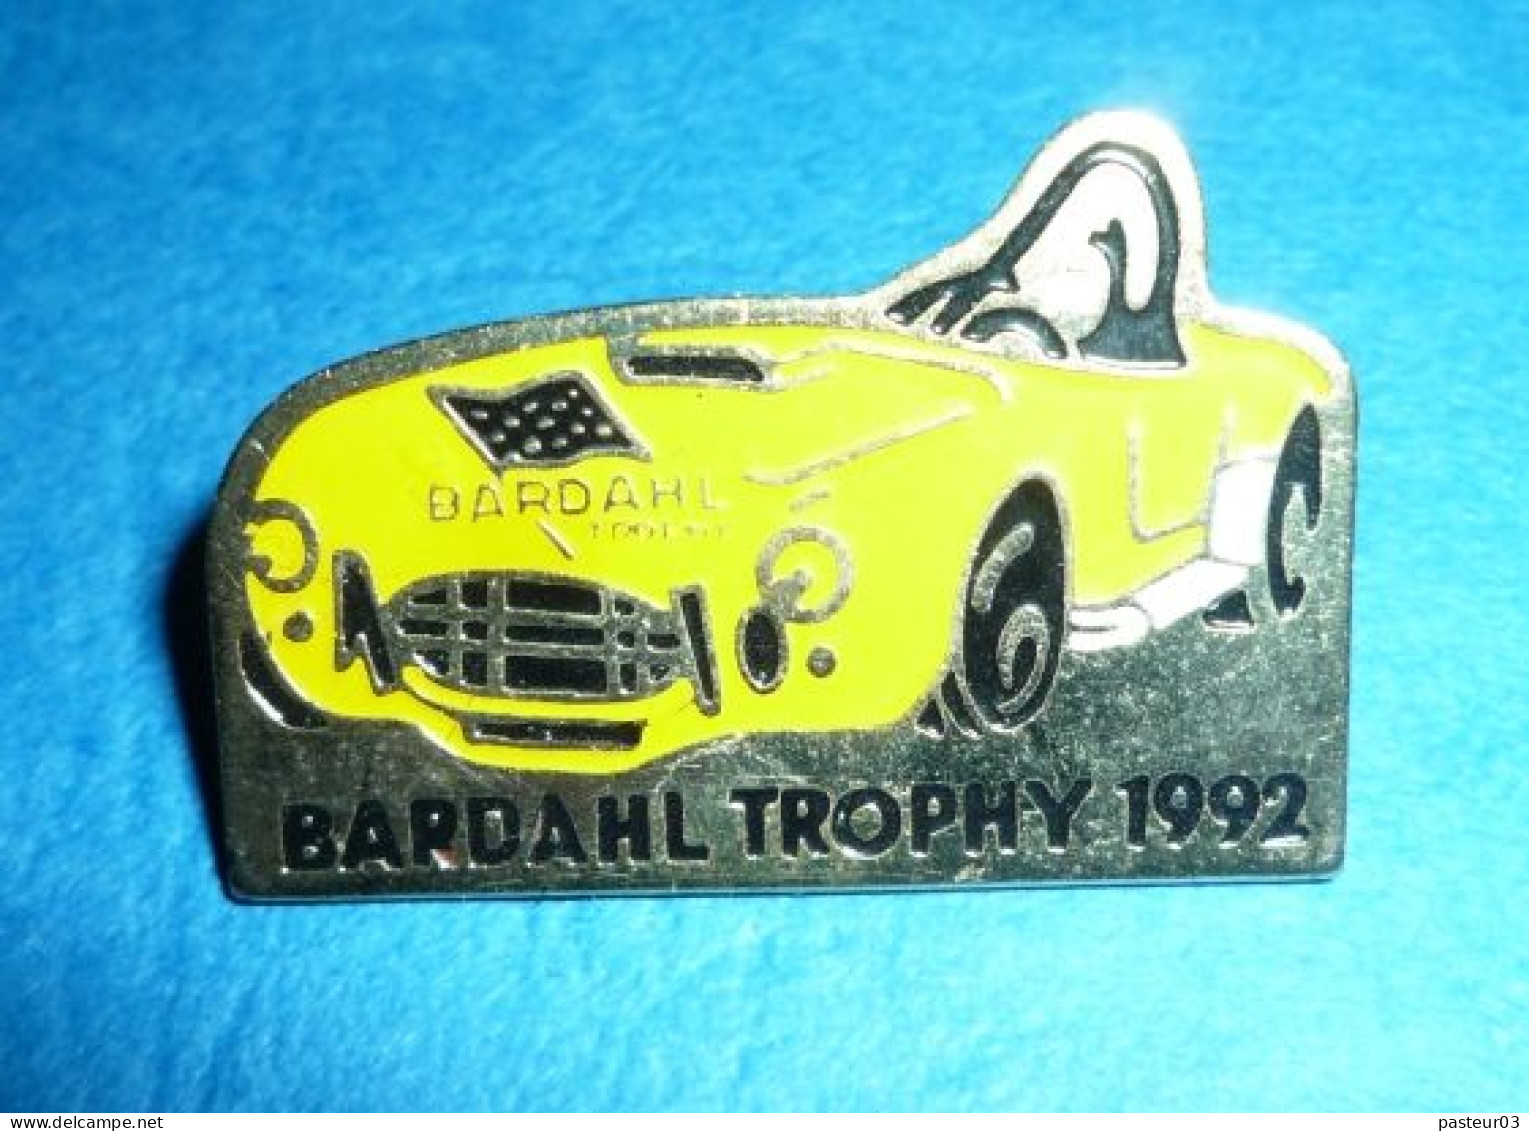 Bardhal Trophy 1992 Compétition Véhicules De Colletions Nevers Magny Cours (1ex.) - Fuels